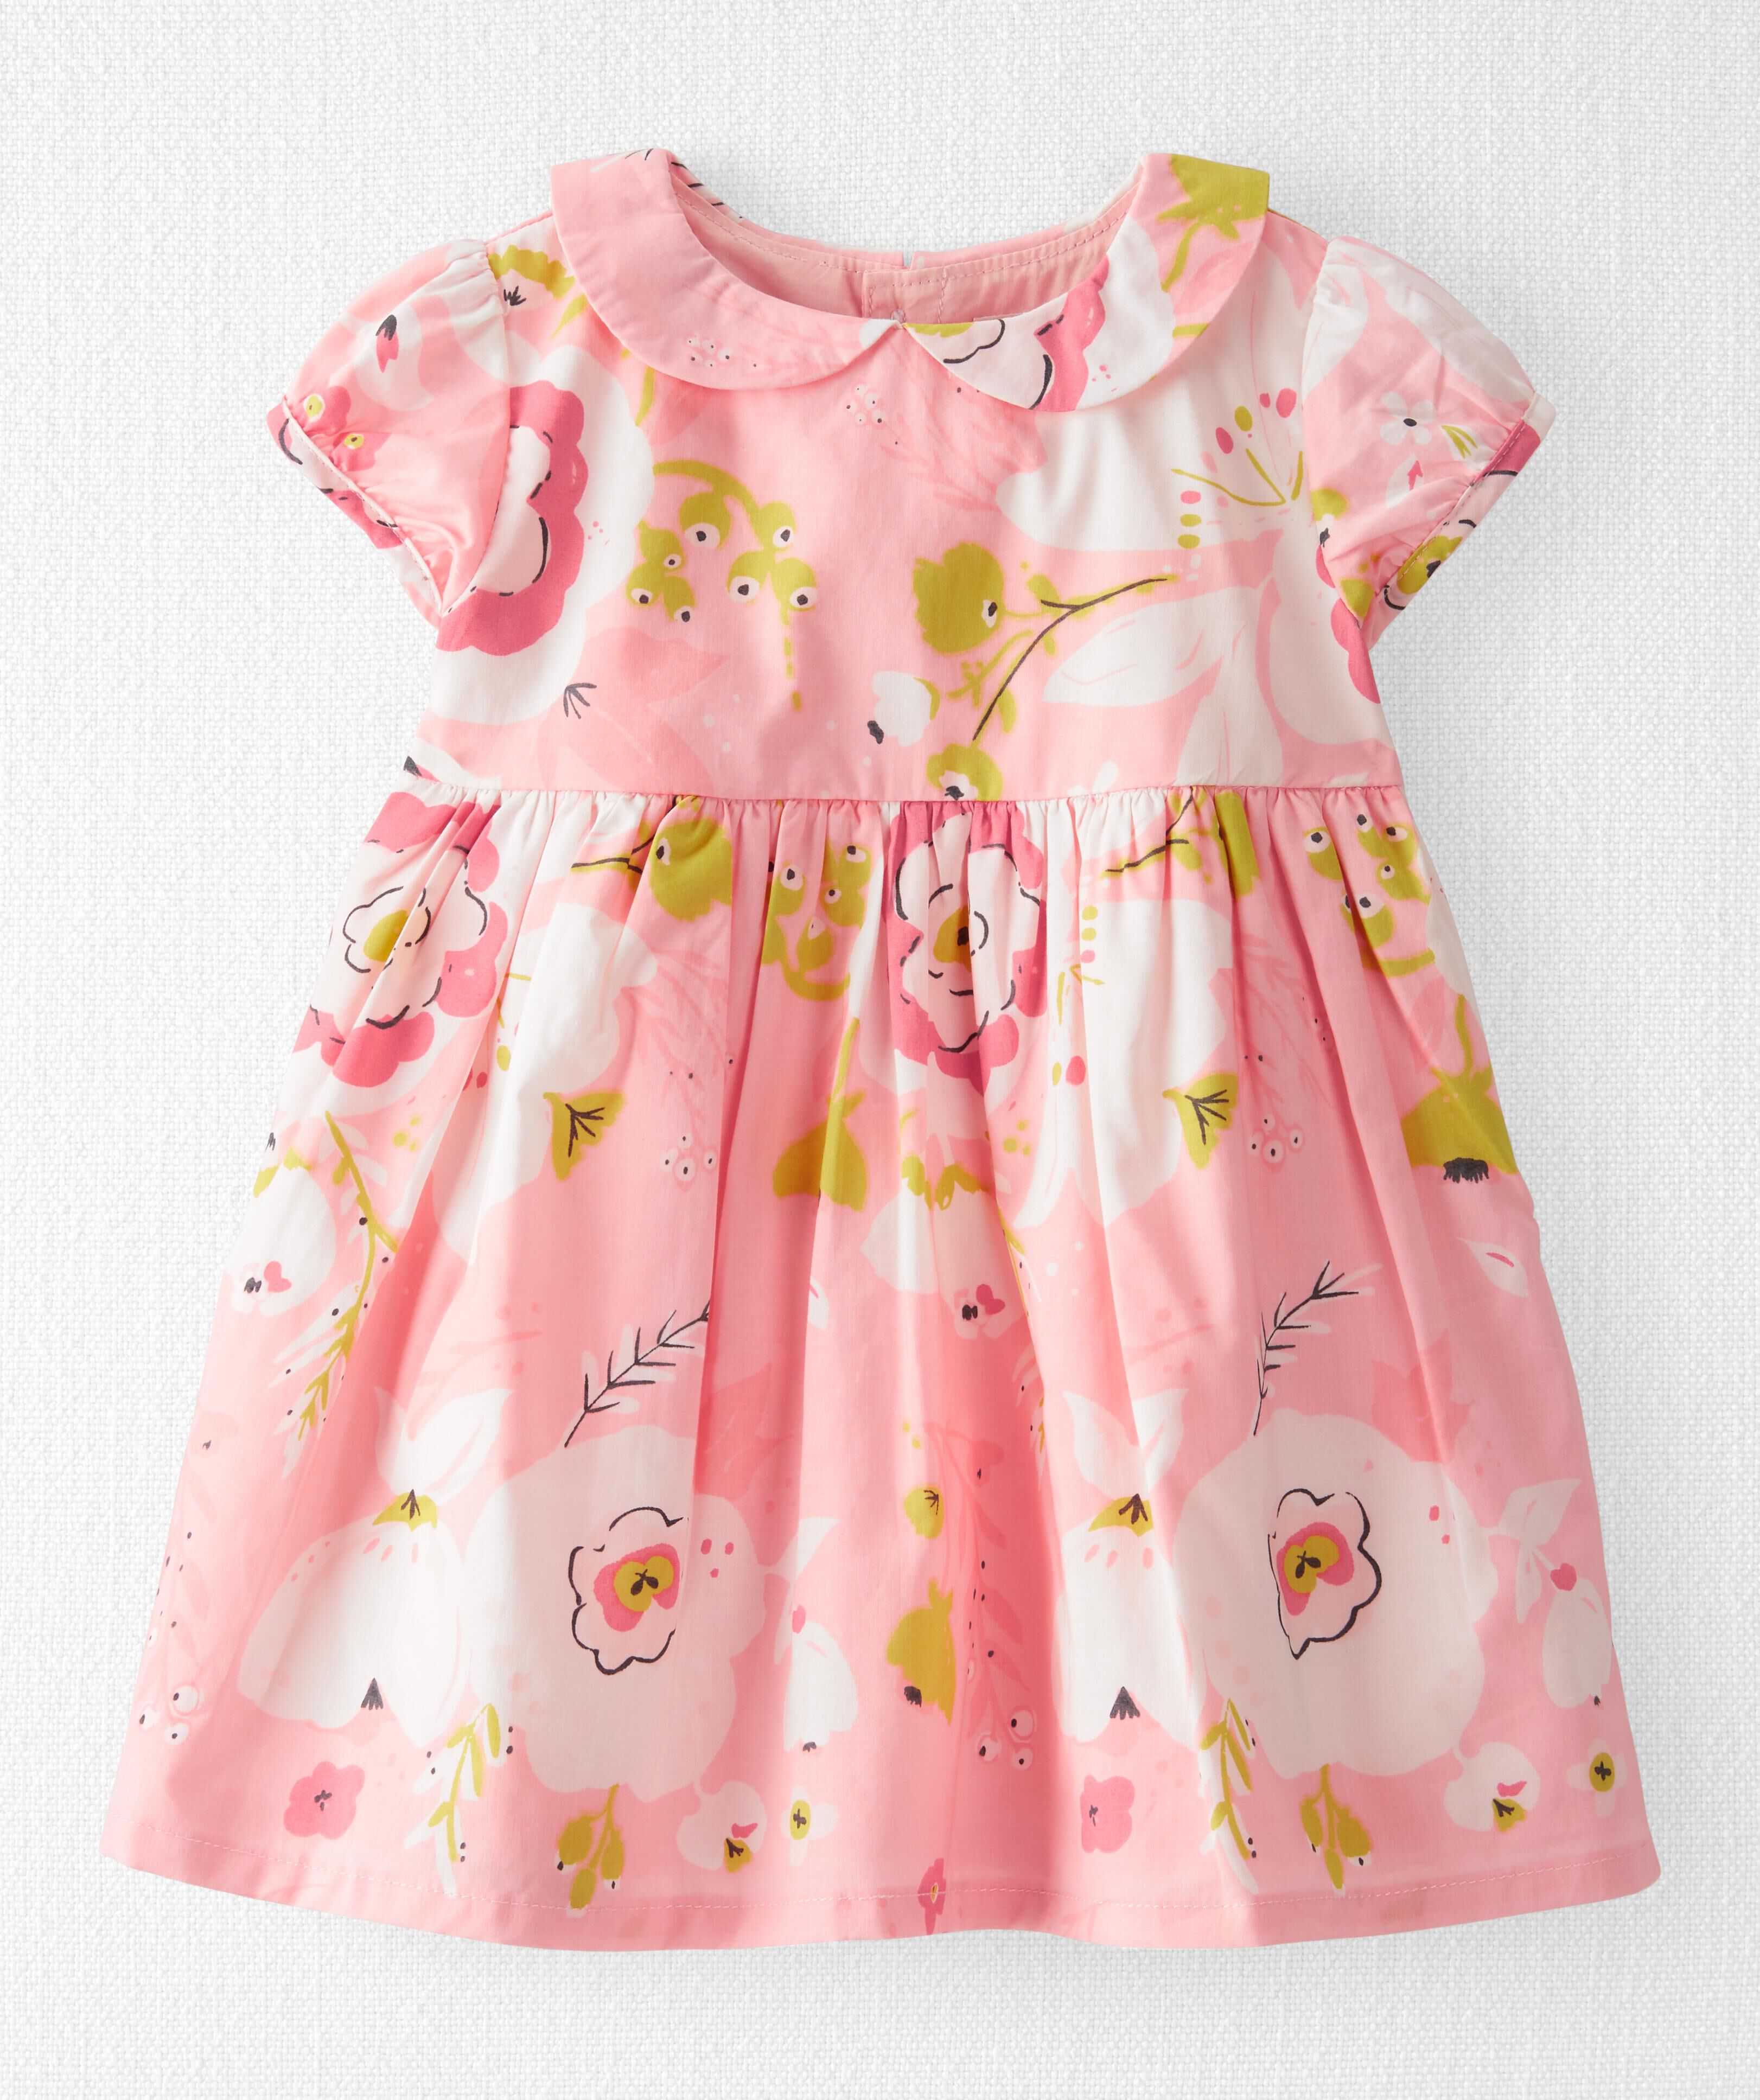 Organic cotton dress for girls Organic baby clothes Organic kids clothes Dress for kids Baby dress modal